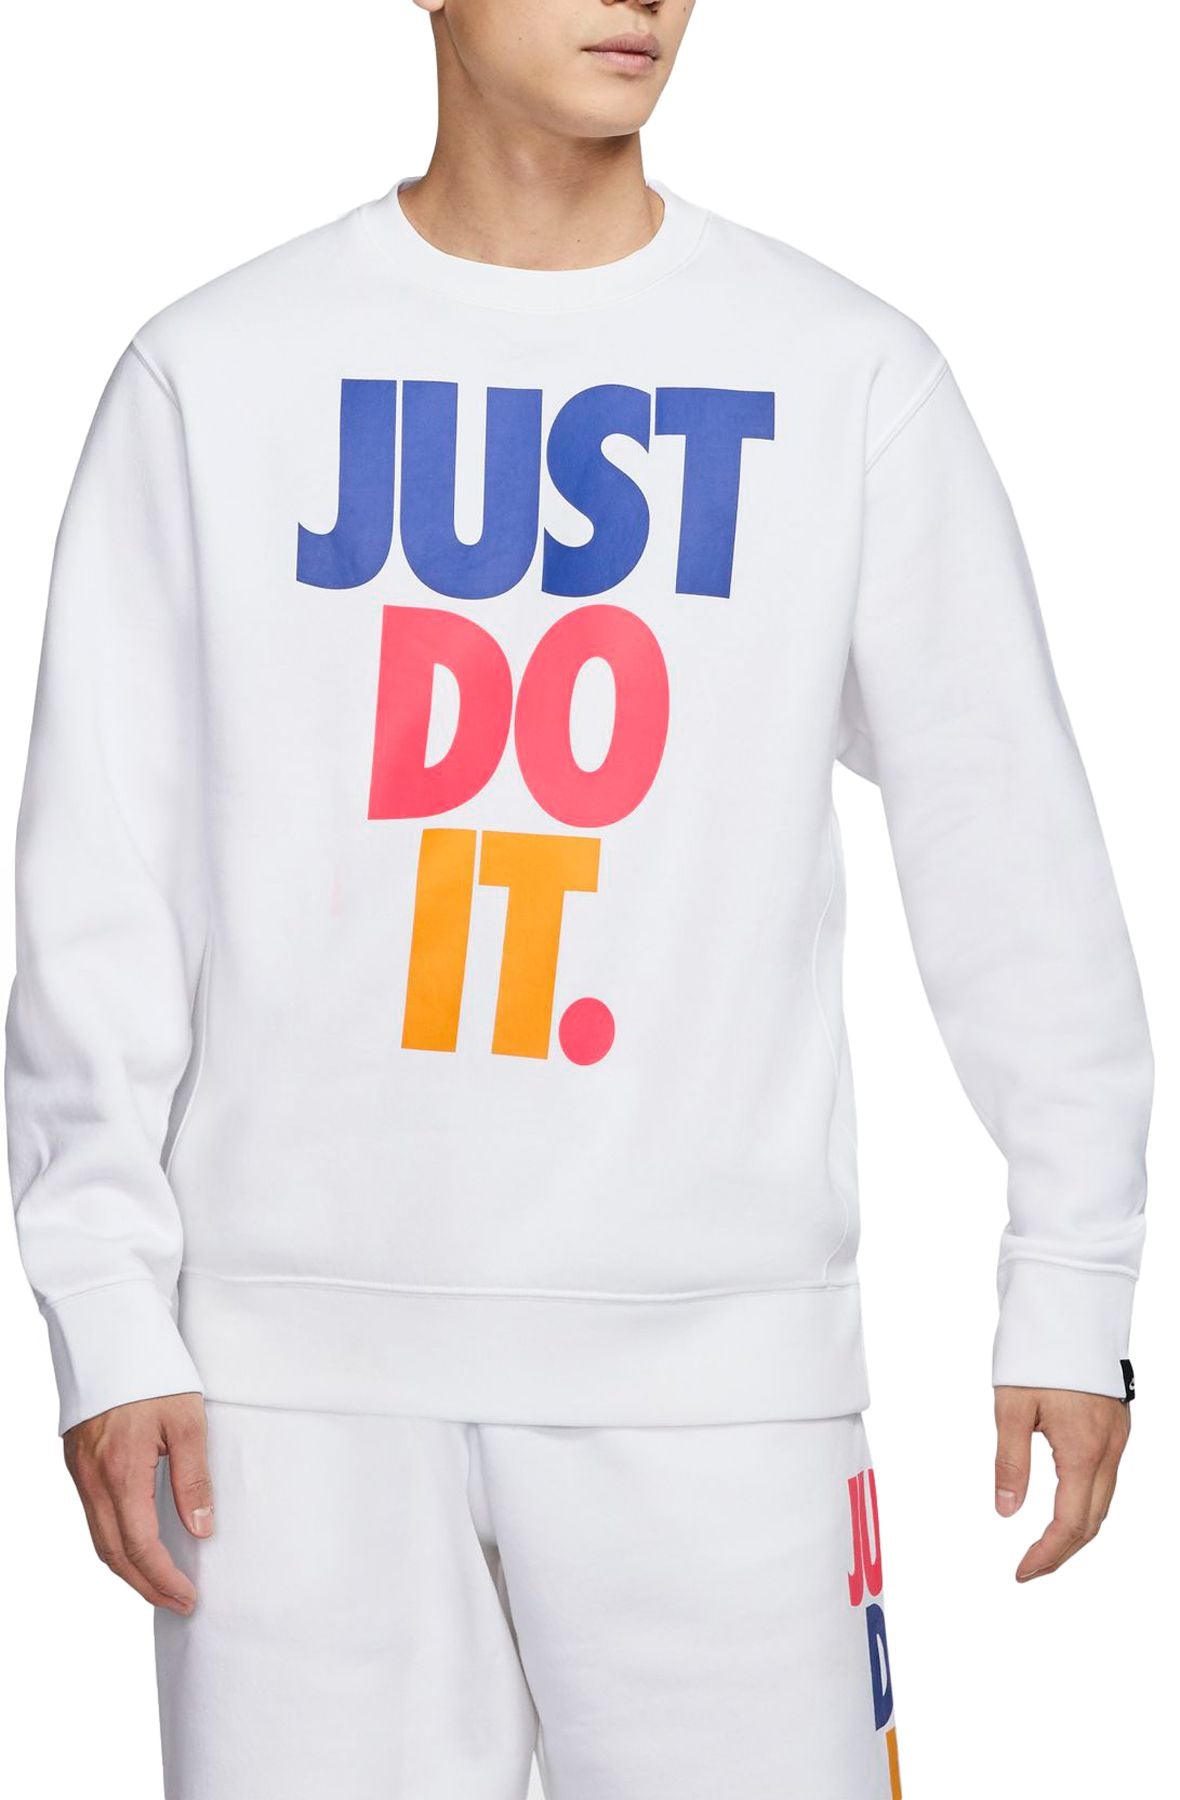 Stylish And Comfortable 'Just Do It' White Sweatshirt